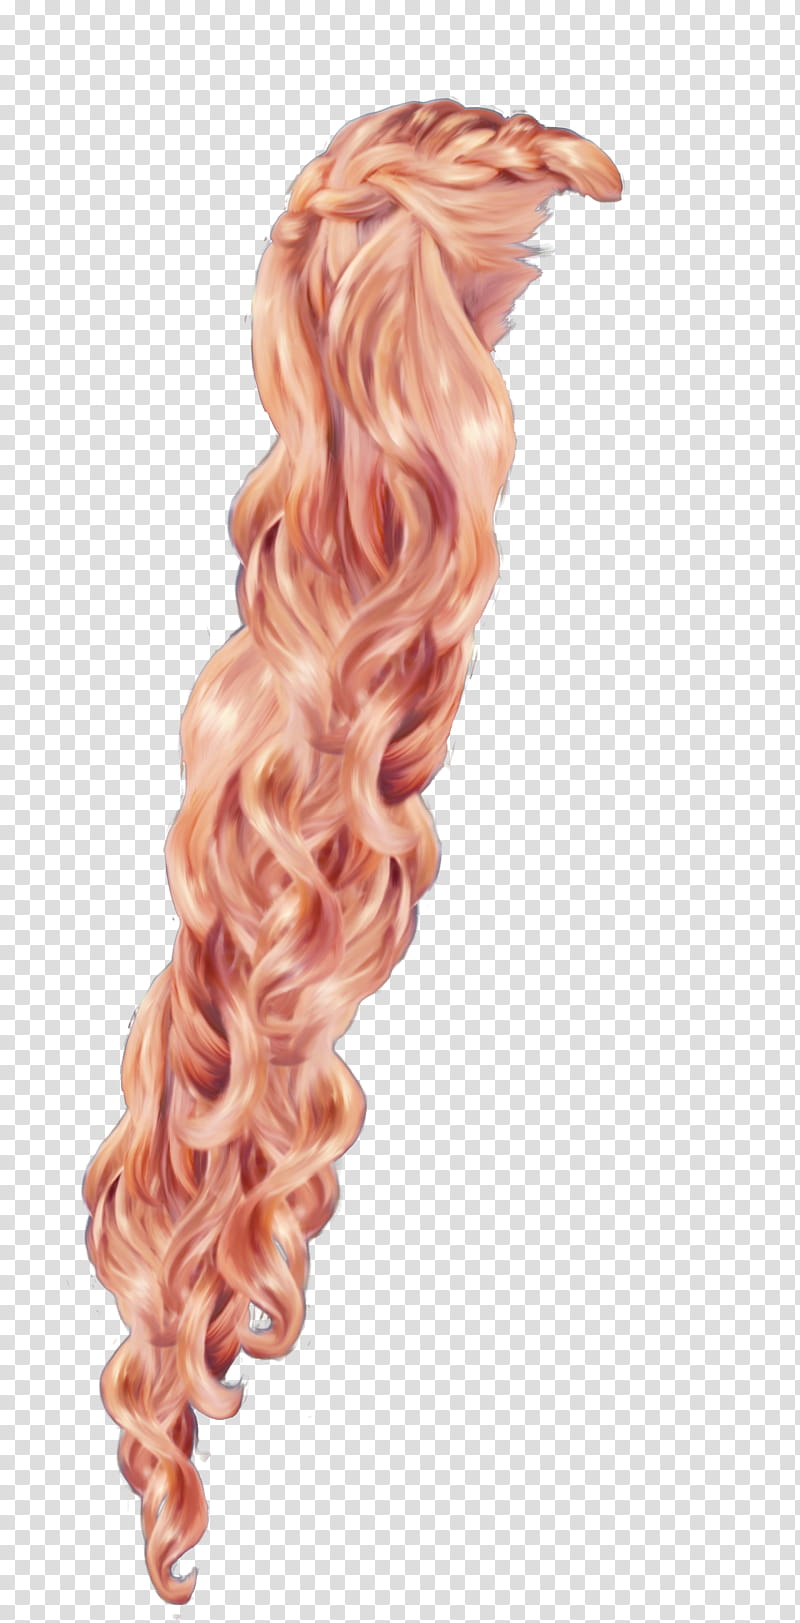 Rapunzel Golden Dawn, blond hair illustration transparent background PNG clipart